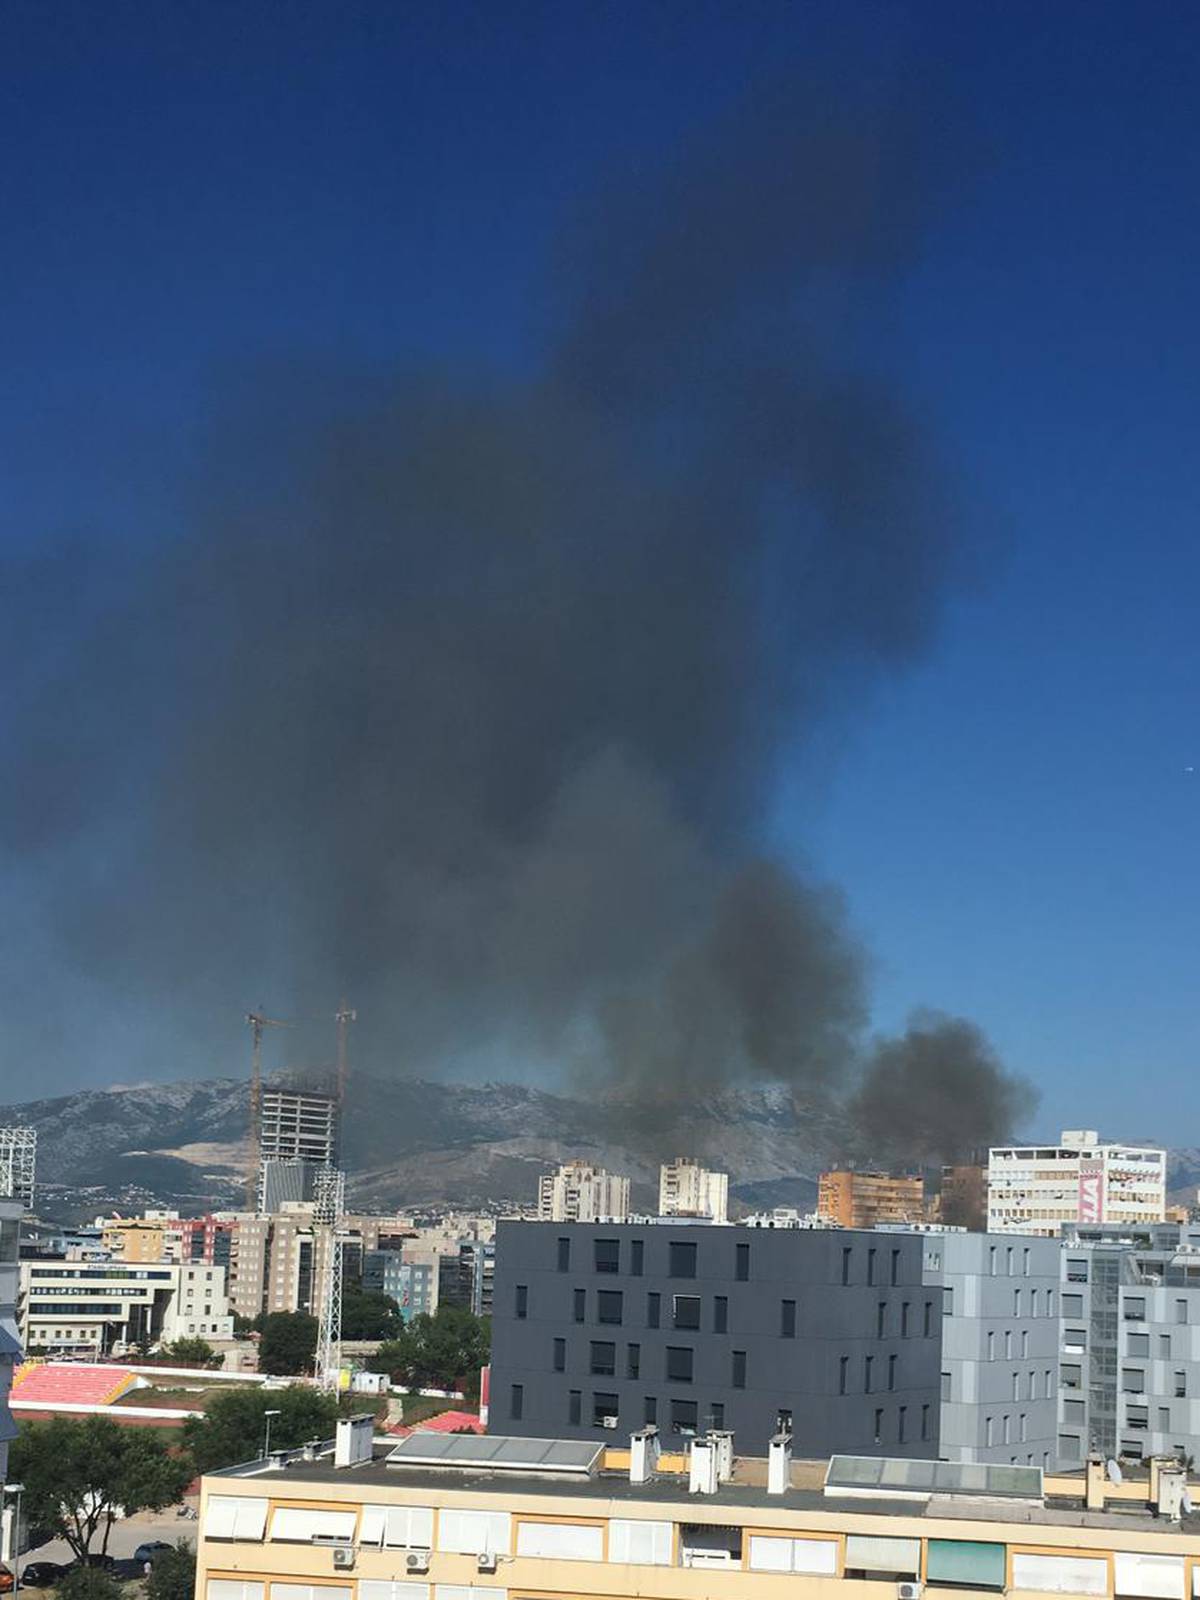 Buknulo je skladište Slobodne Dalmacije: Požar je lokaliziran